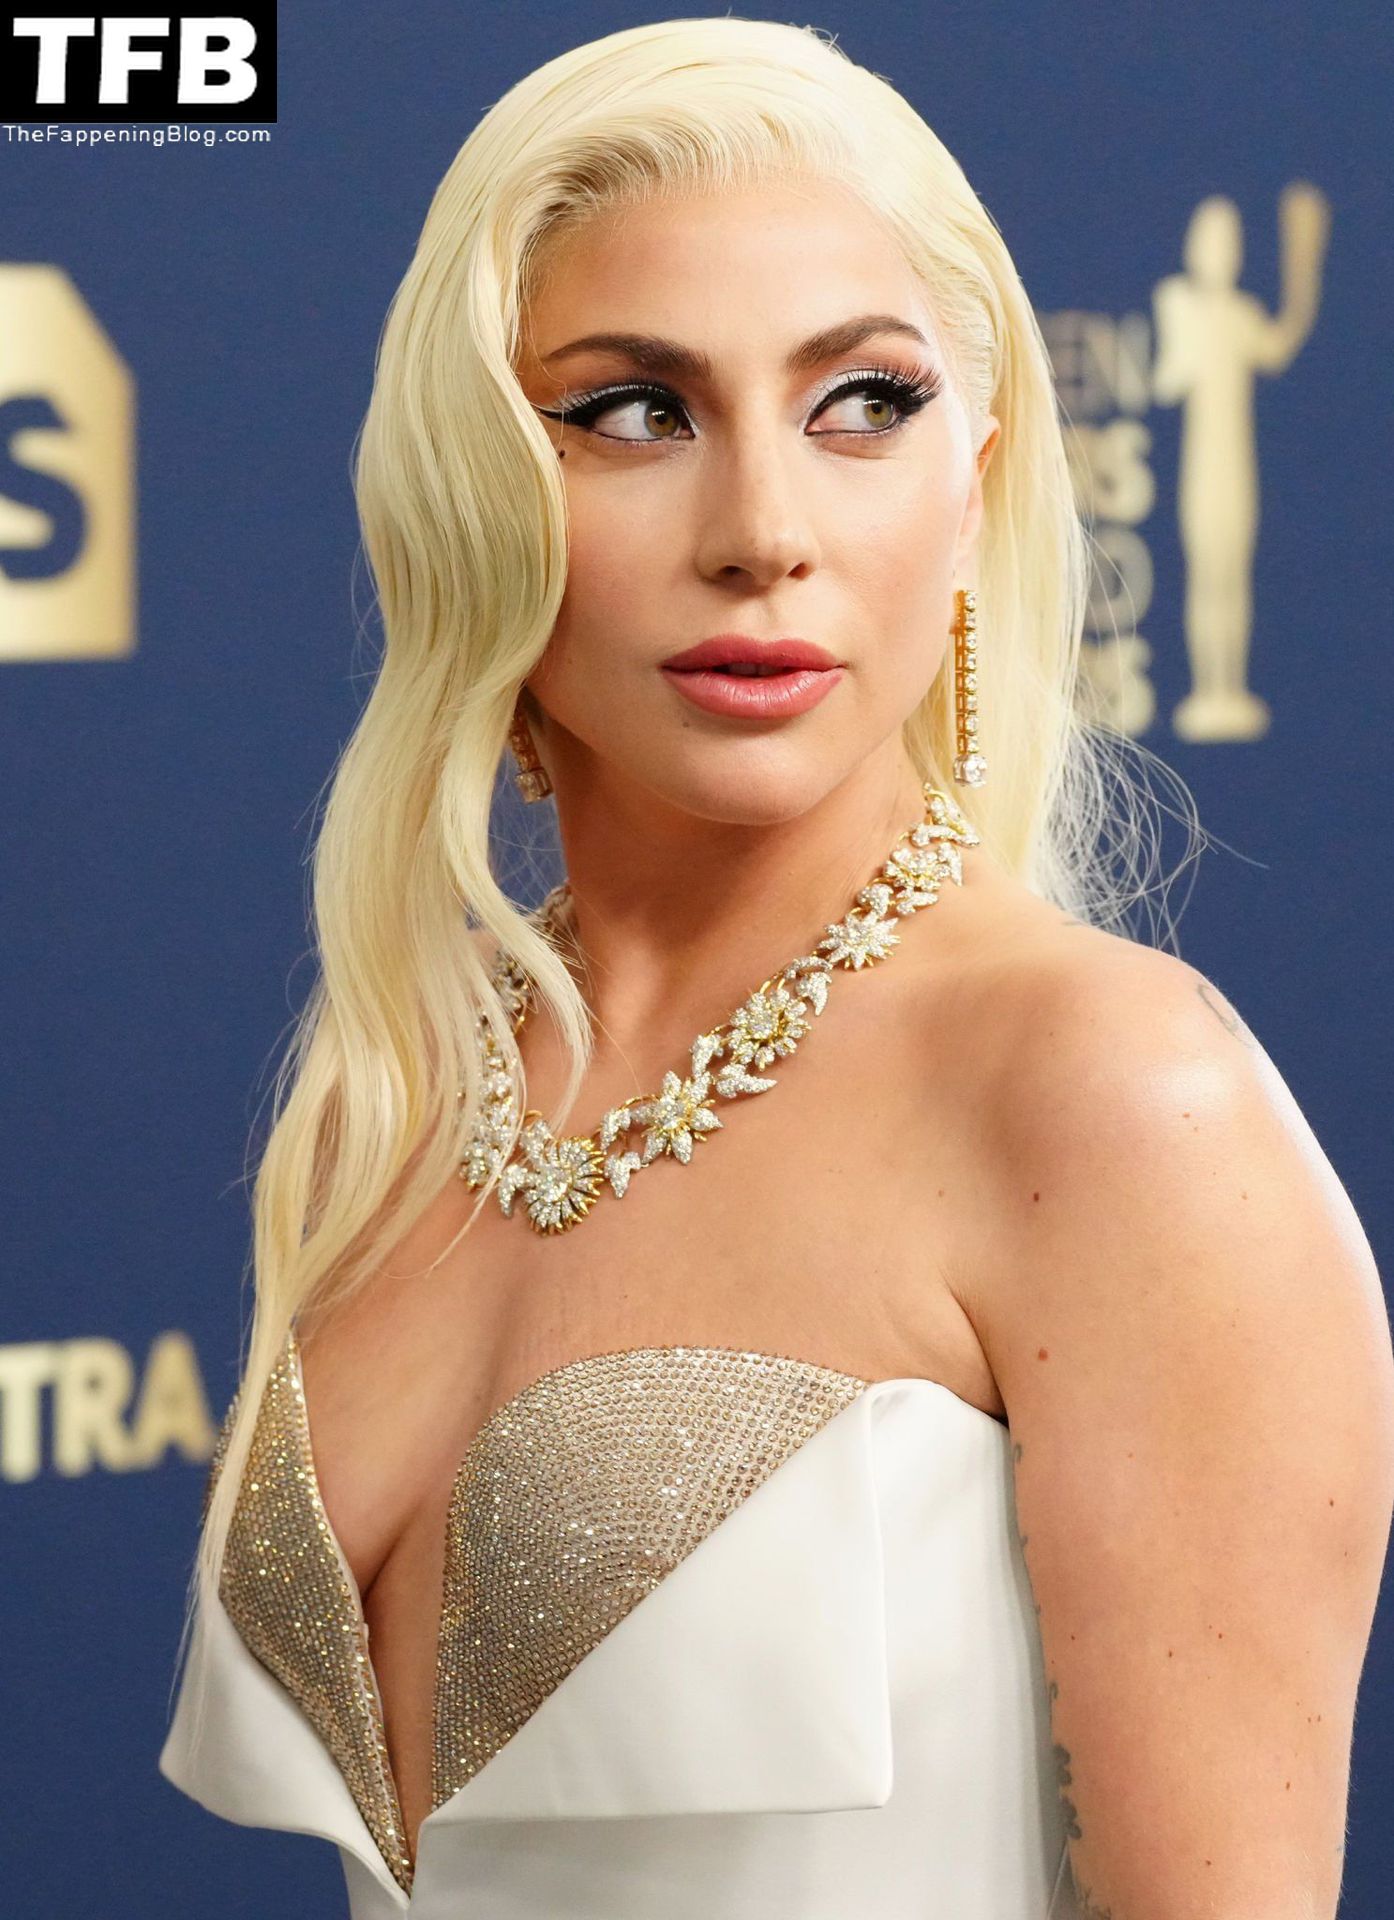 Lady-Gaga-Sexy-The-Fappening-Blog-61.jpg